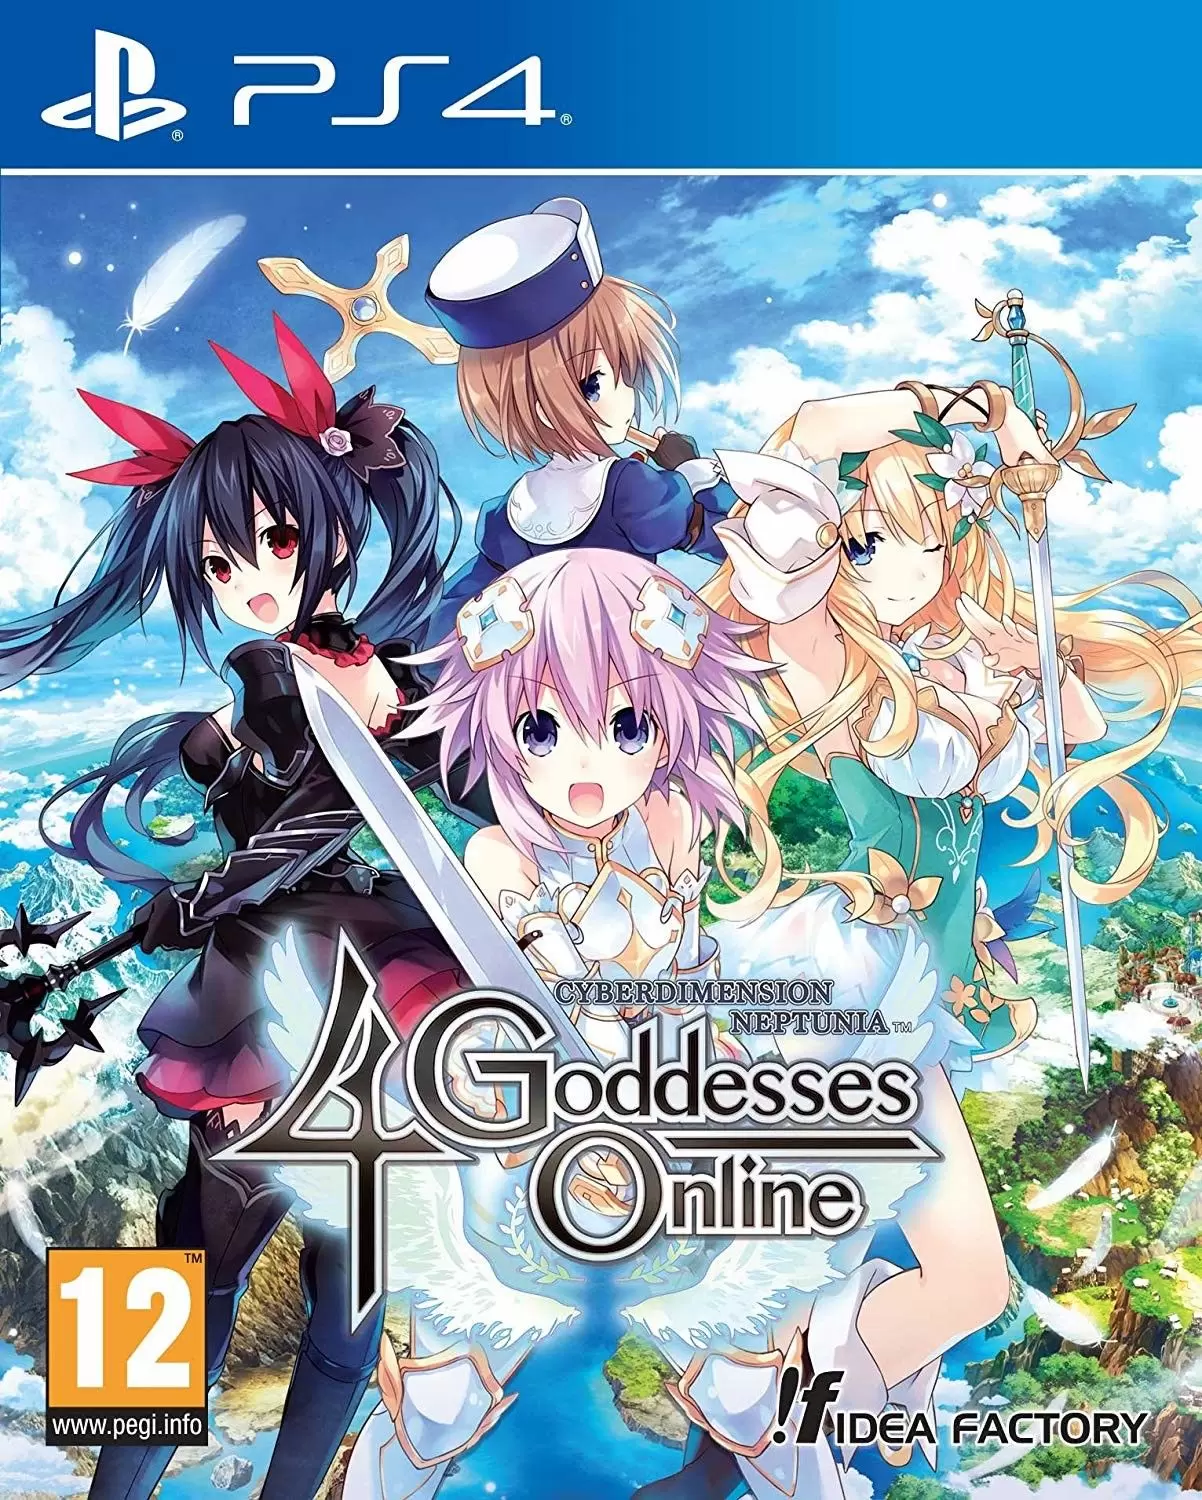 Jeux PS4 - Cyberdimension Neptuni a: 4 Goddesses Online